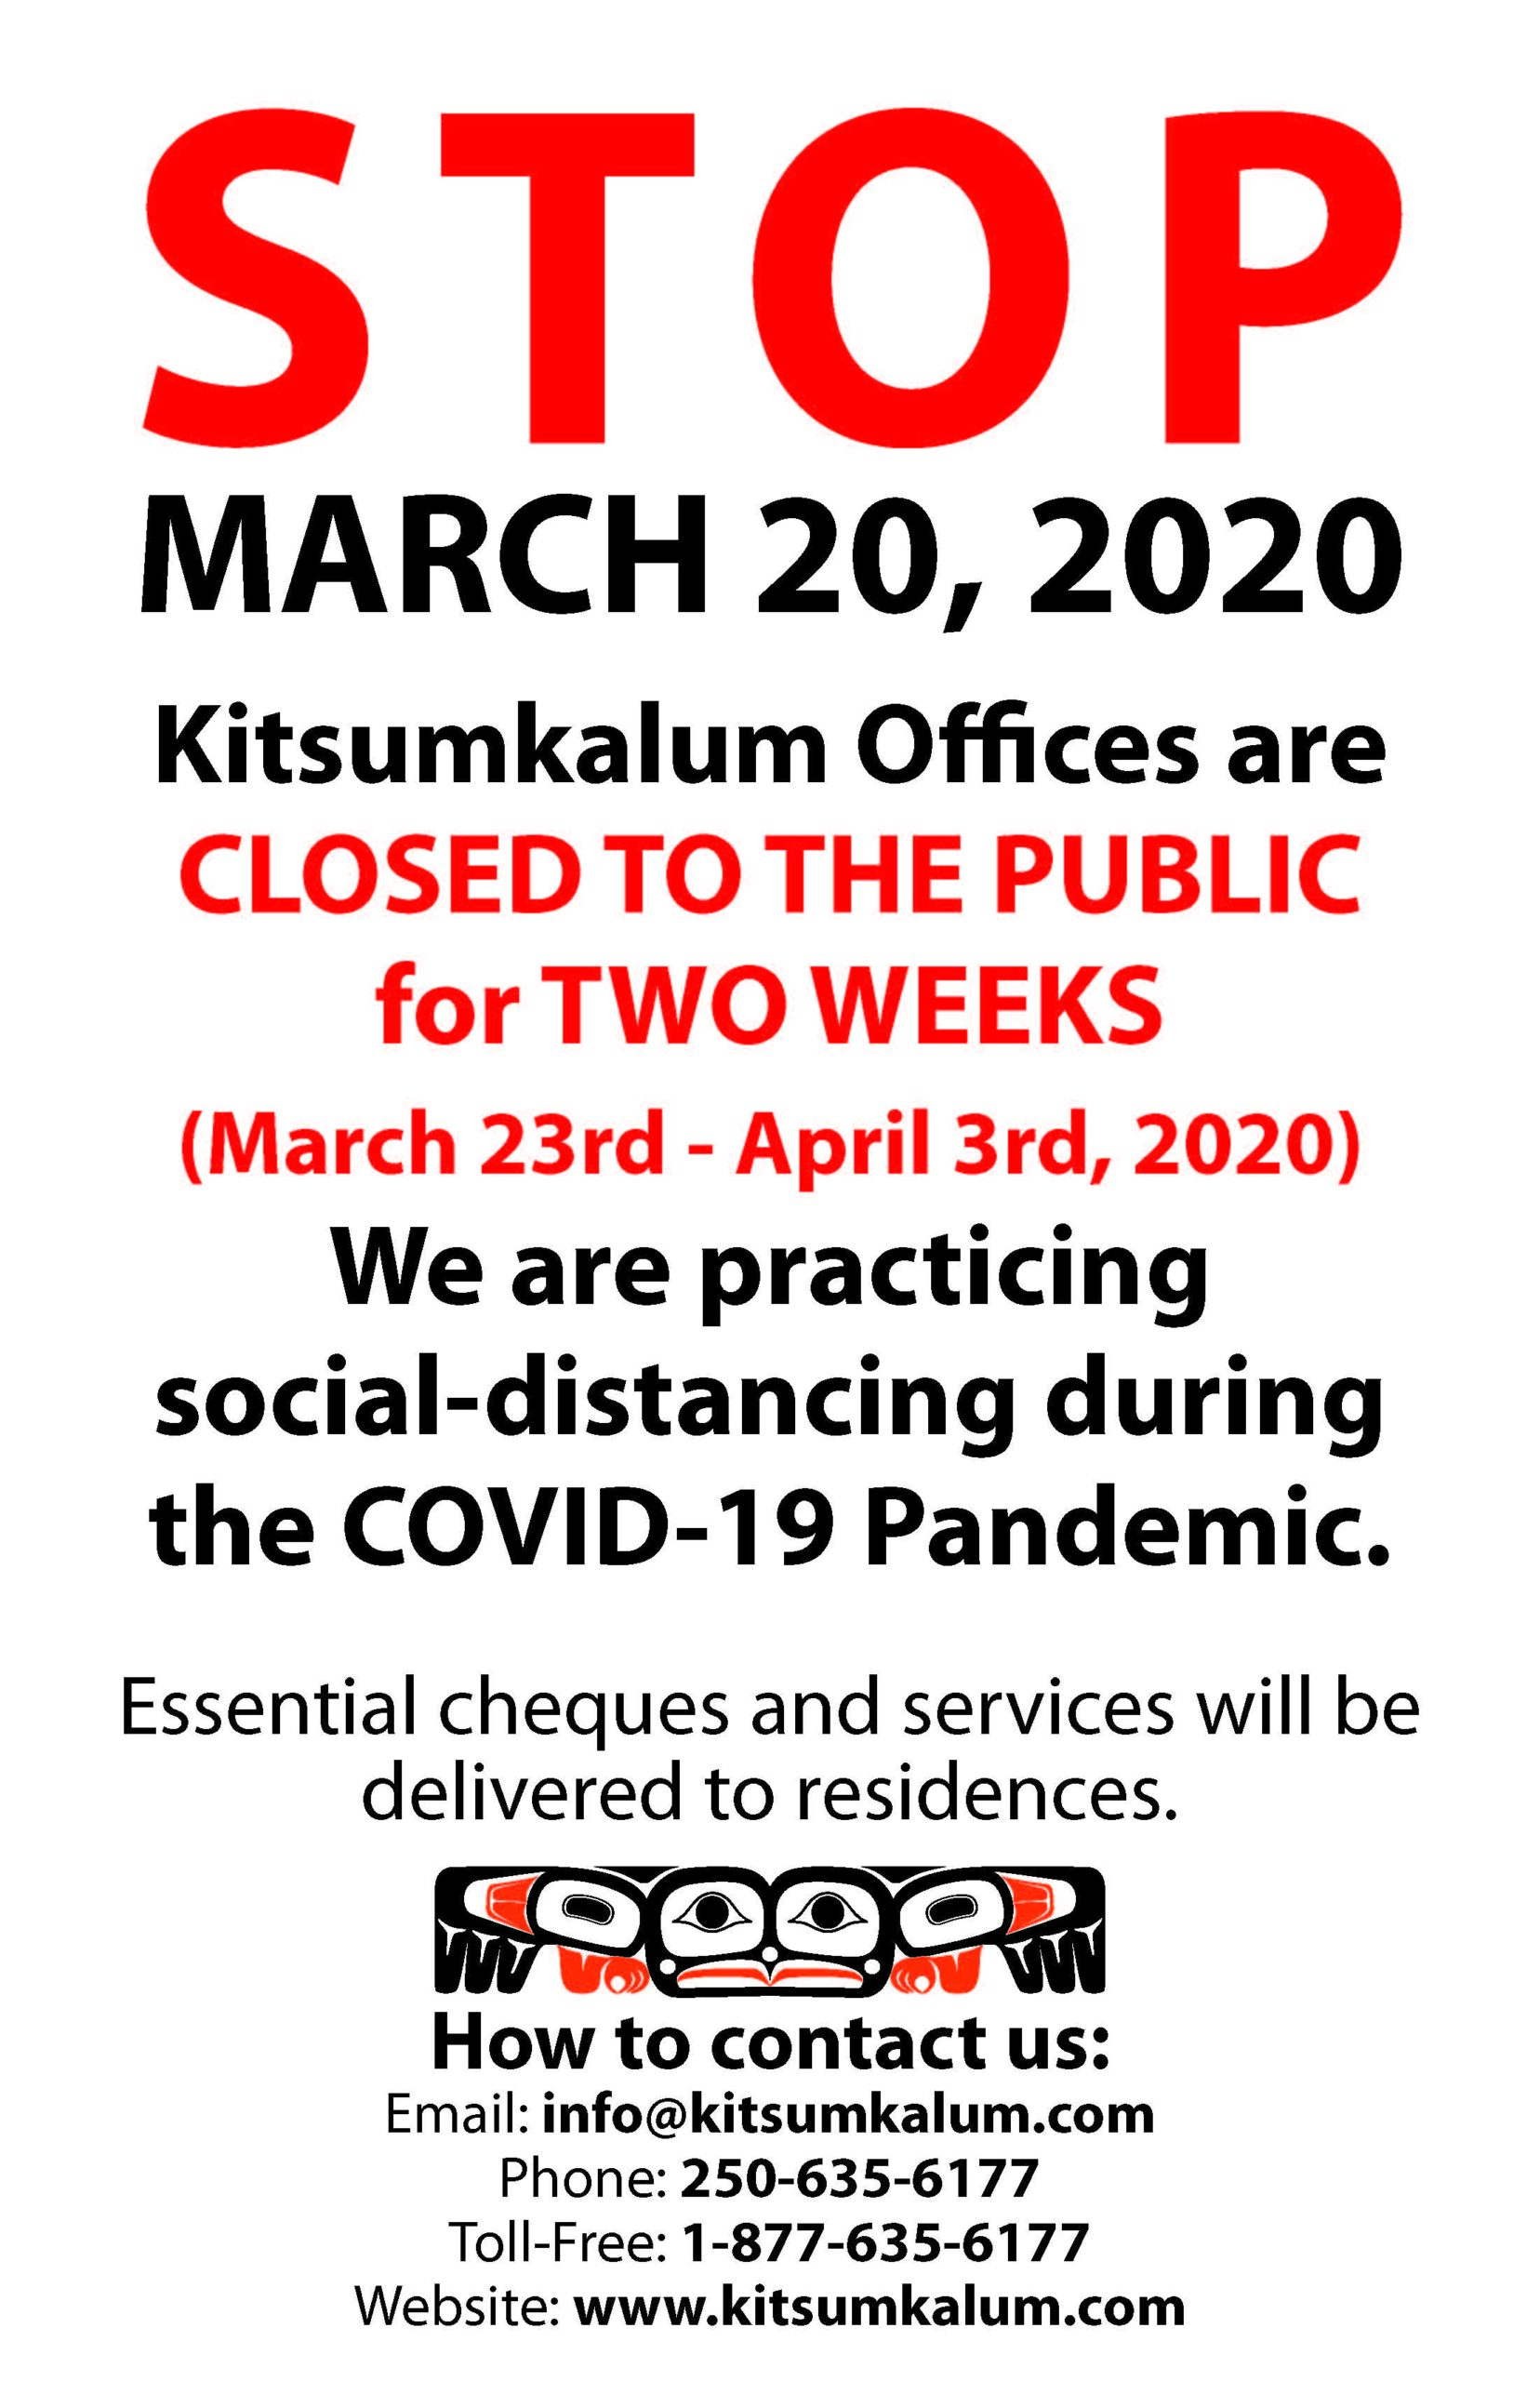 Kitsumkalum Offices Closed to Public